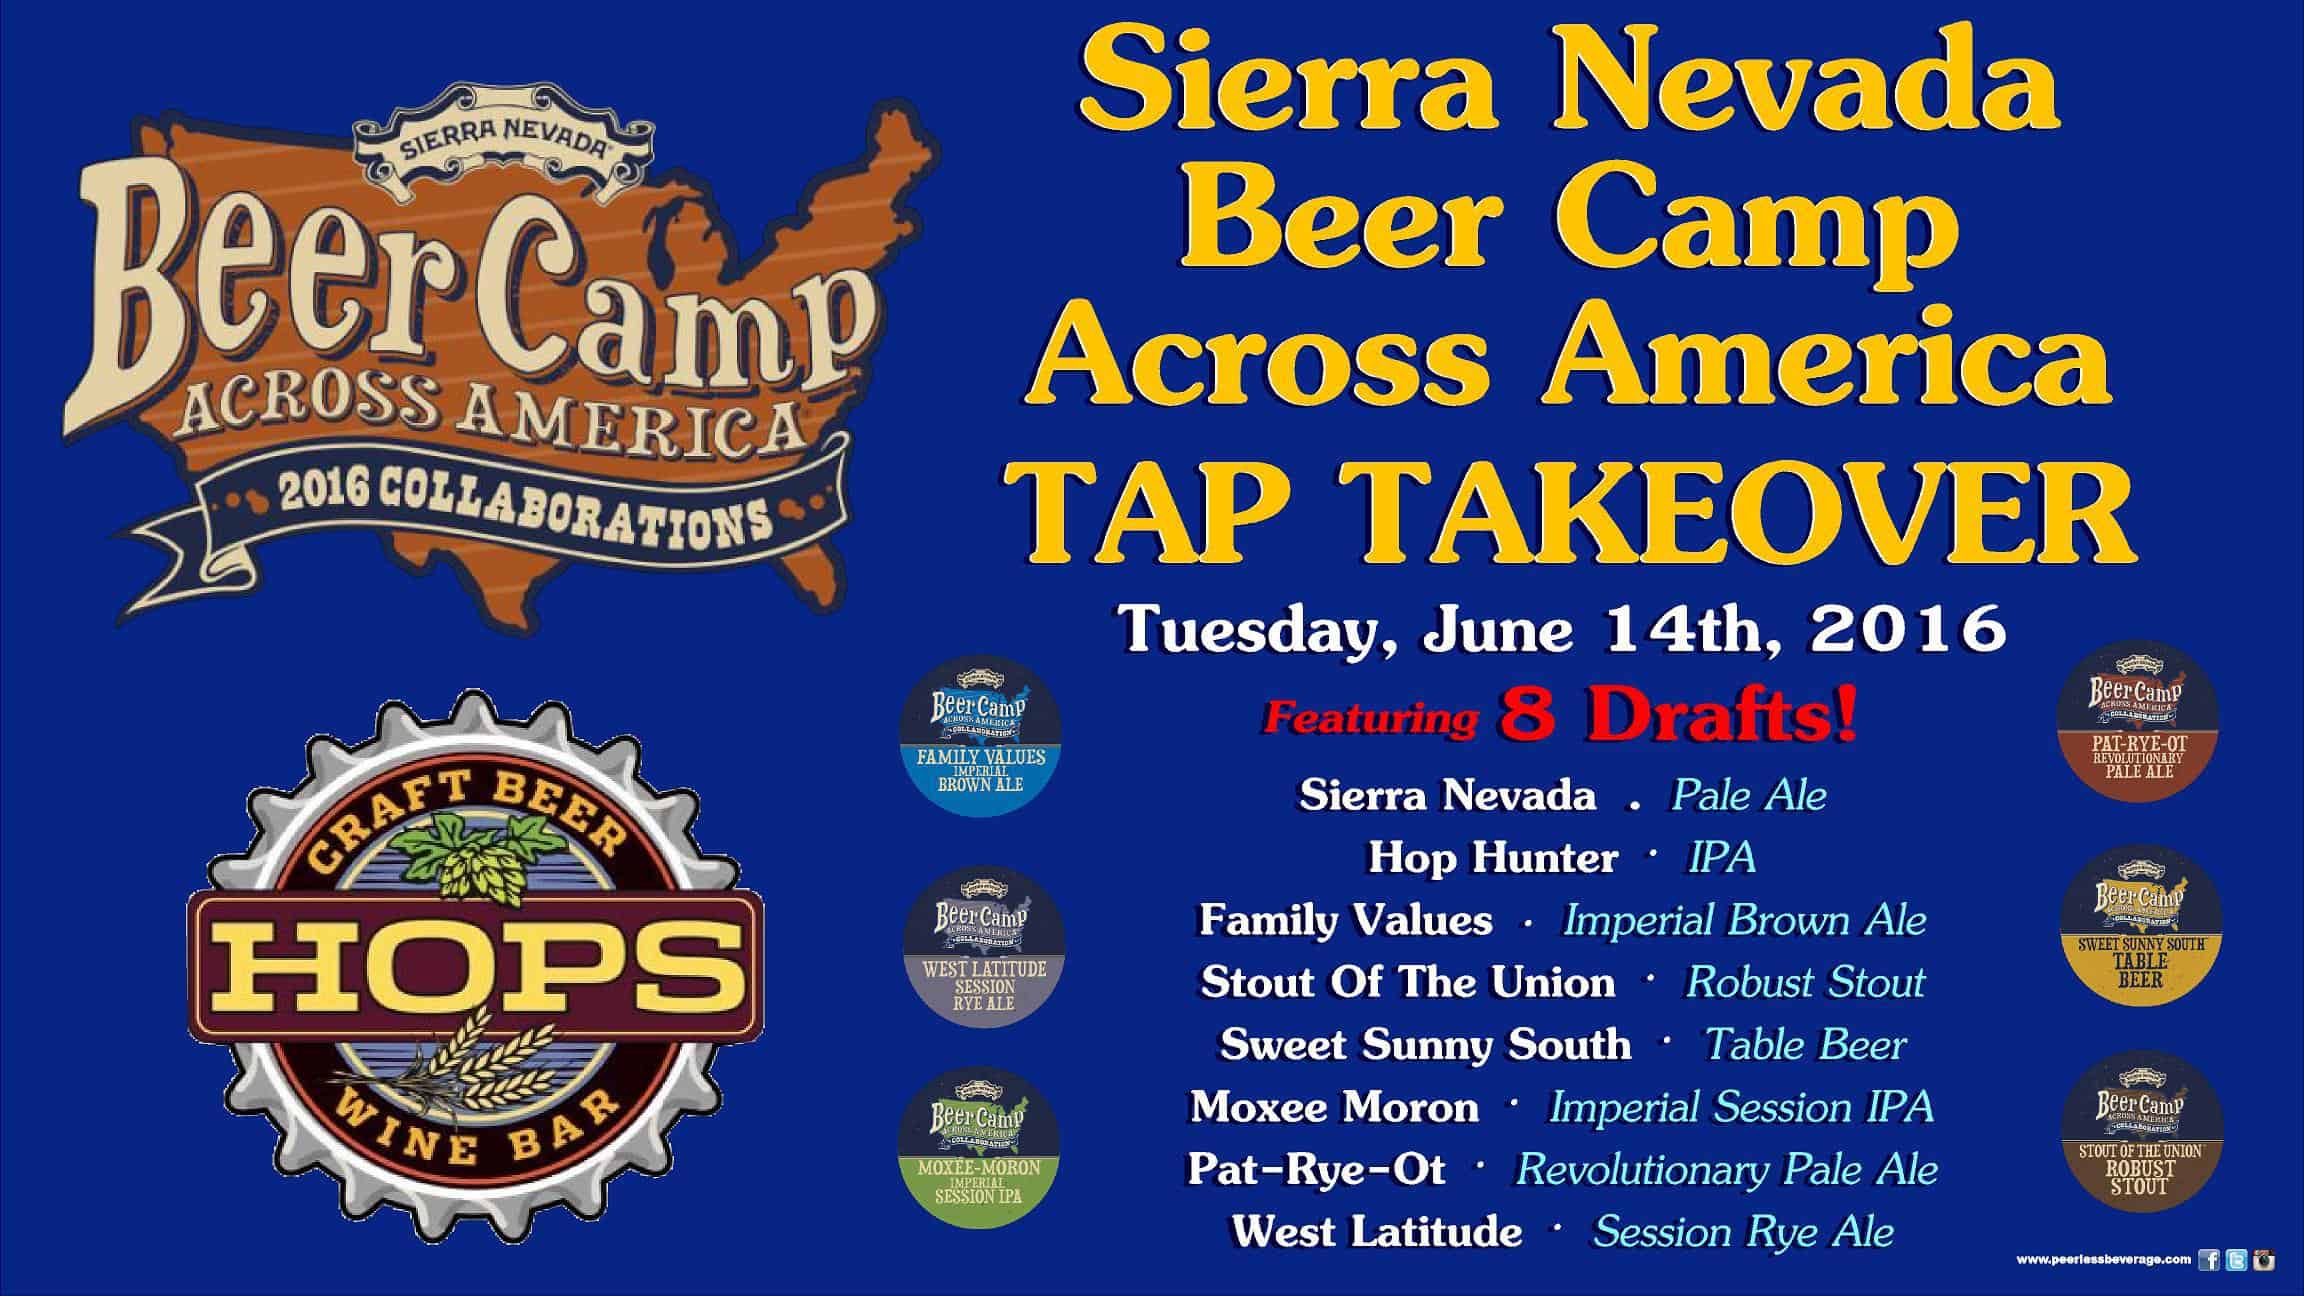 Sierra Nevada Beer Camp Tap Takeover at Hops NJCB